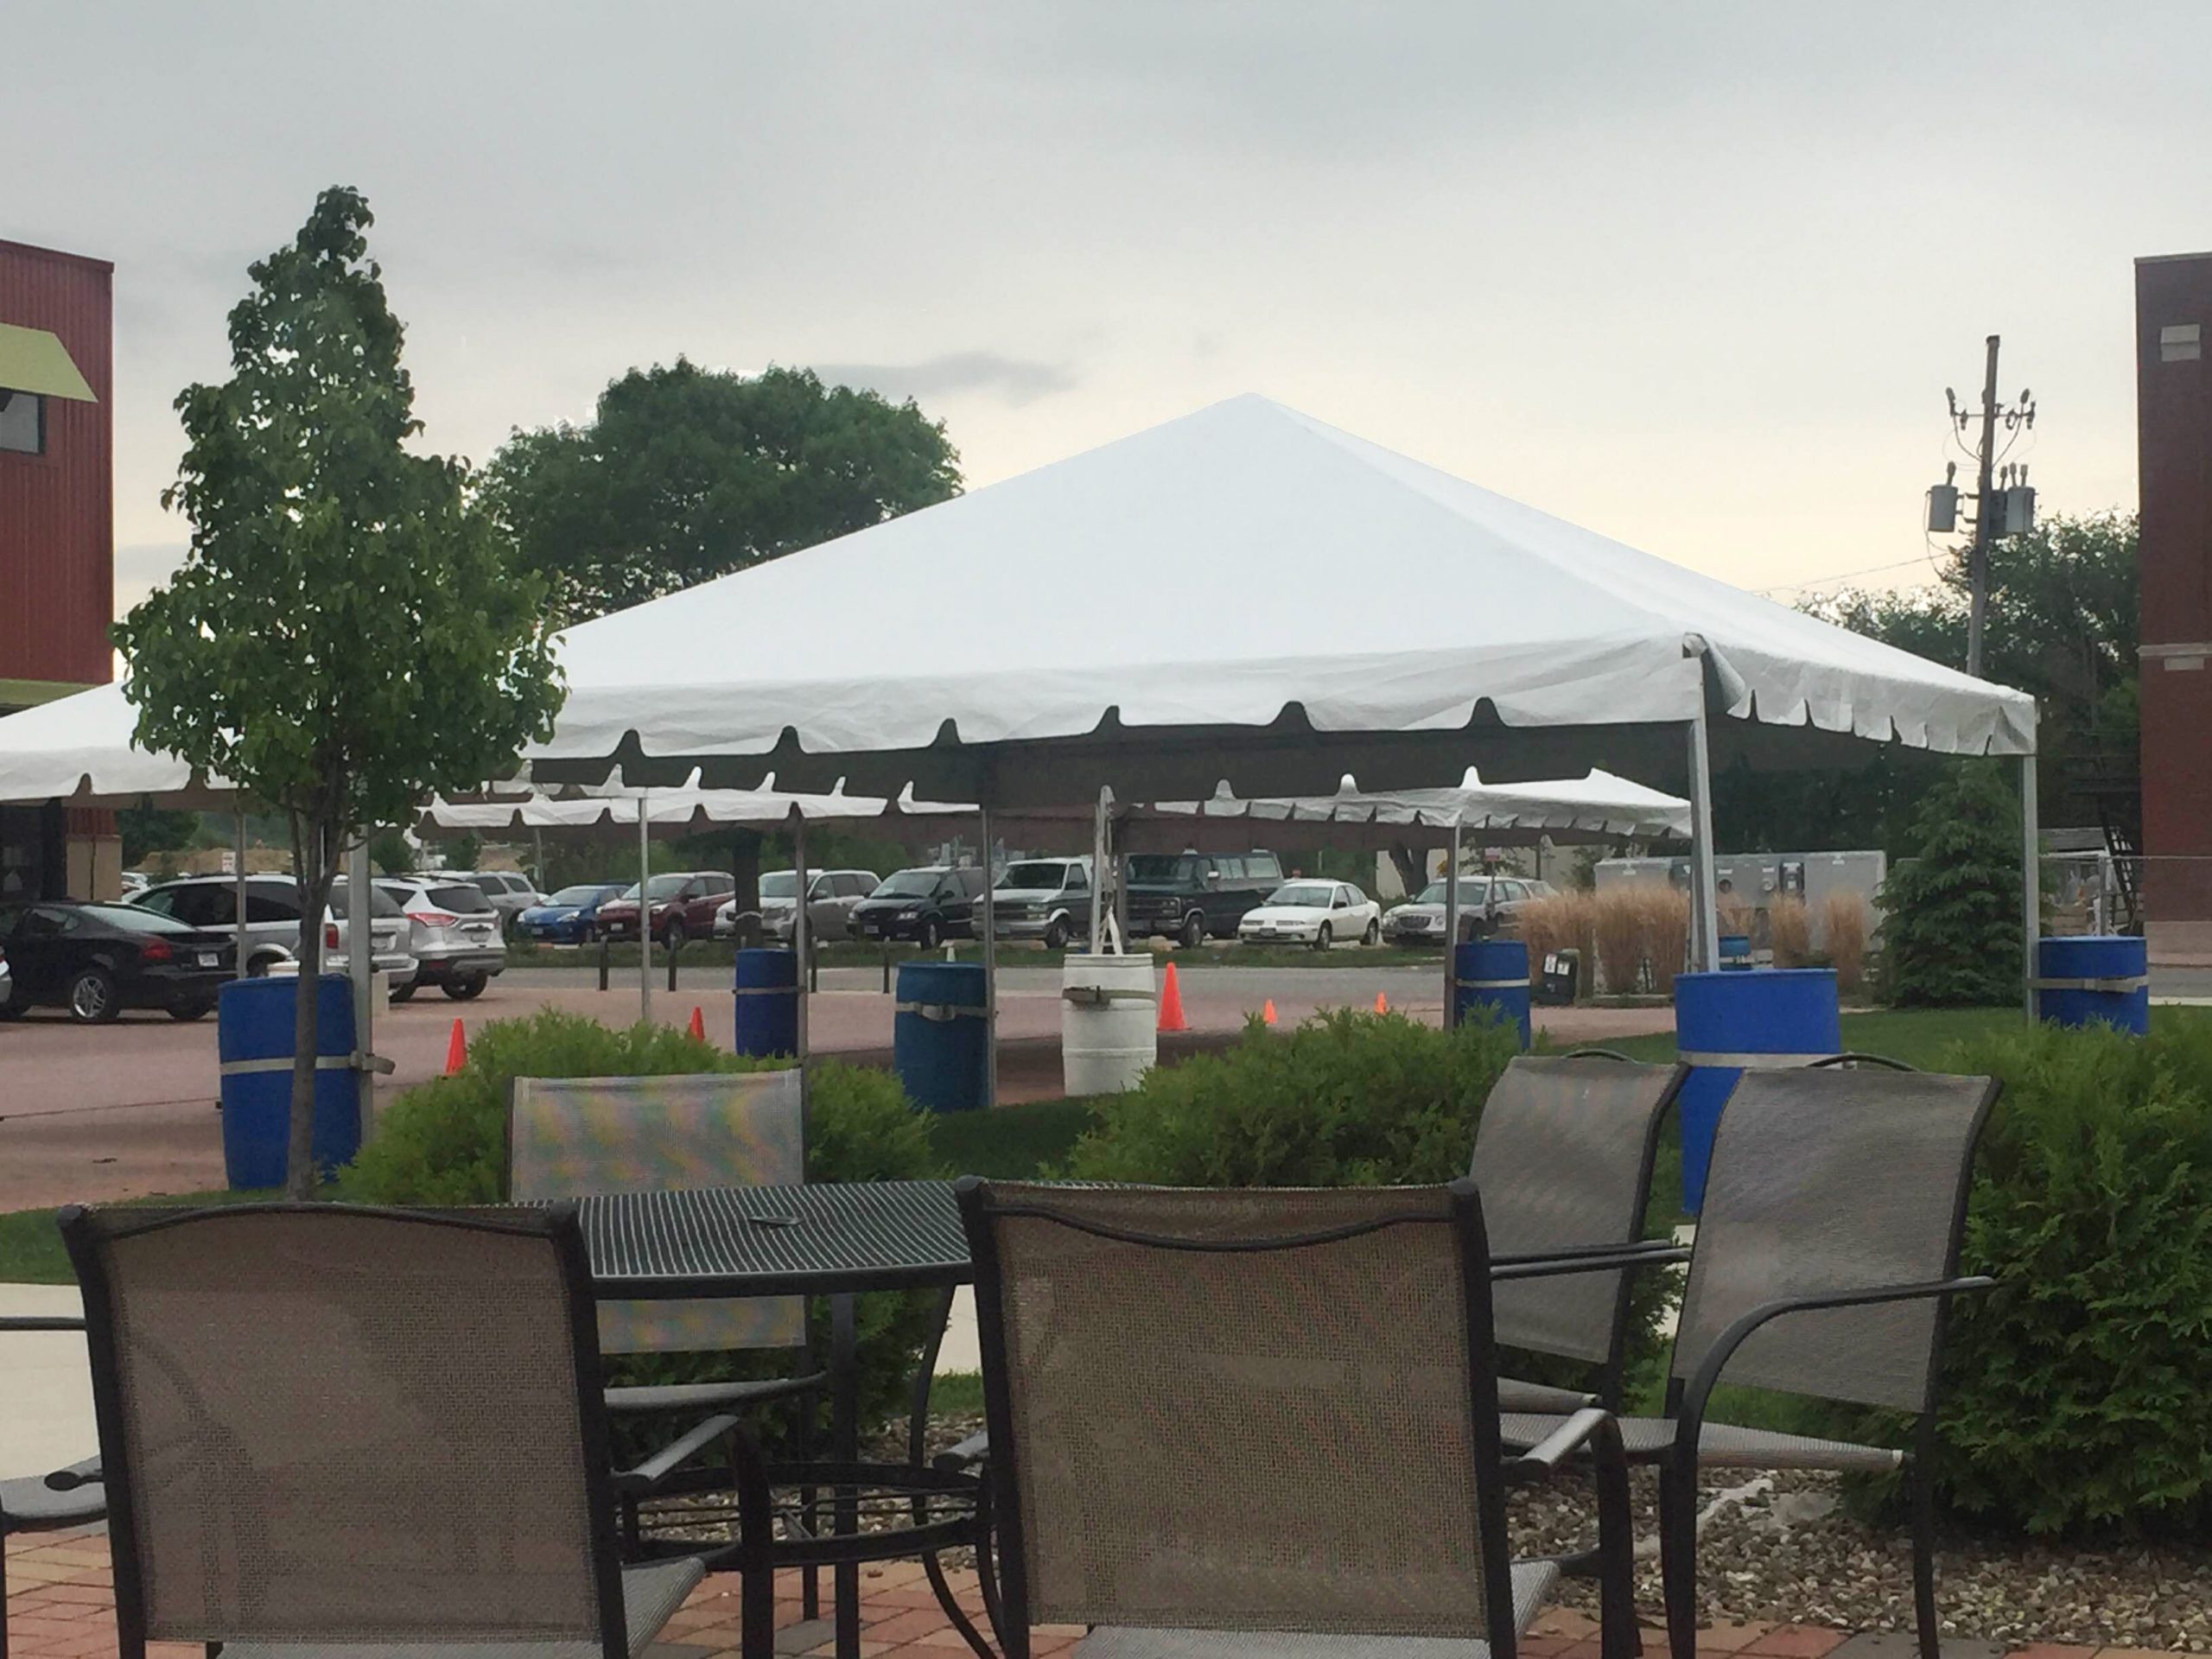 We setup tents for JDRF One Walk at NewBo City Market in Cedar Rapids, IA